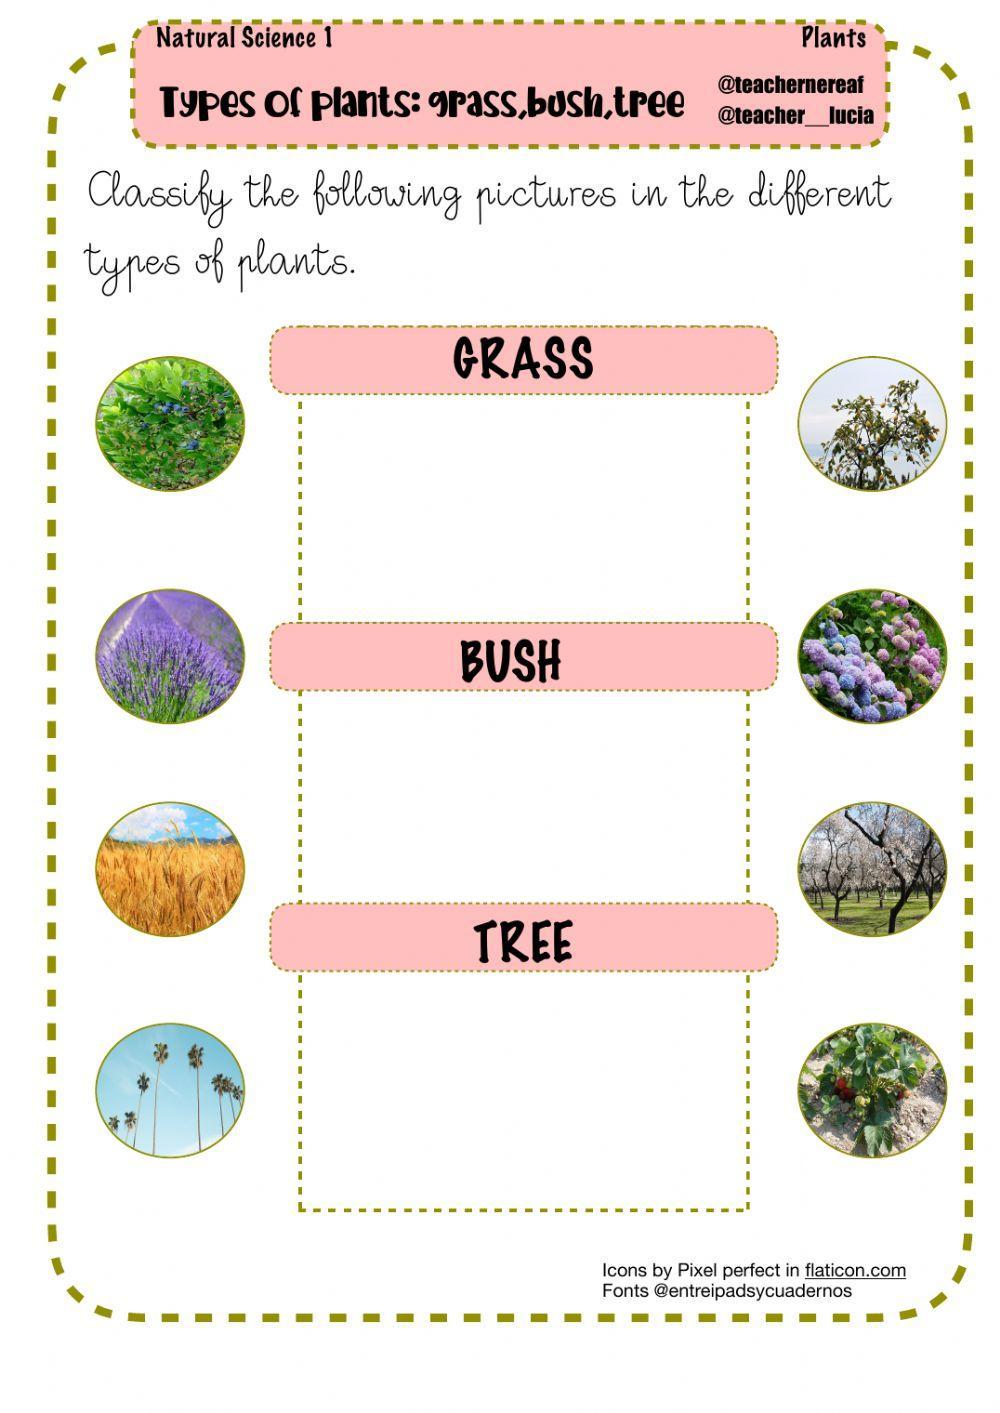 Types of plants: grass,bush,tree